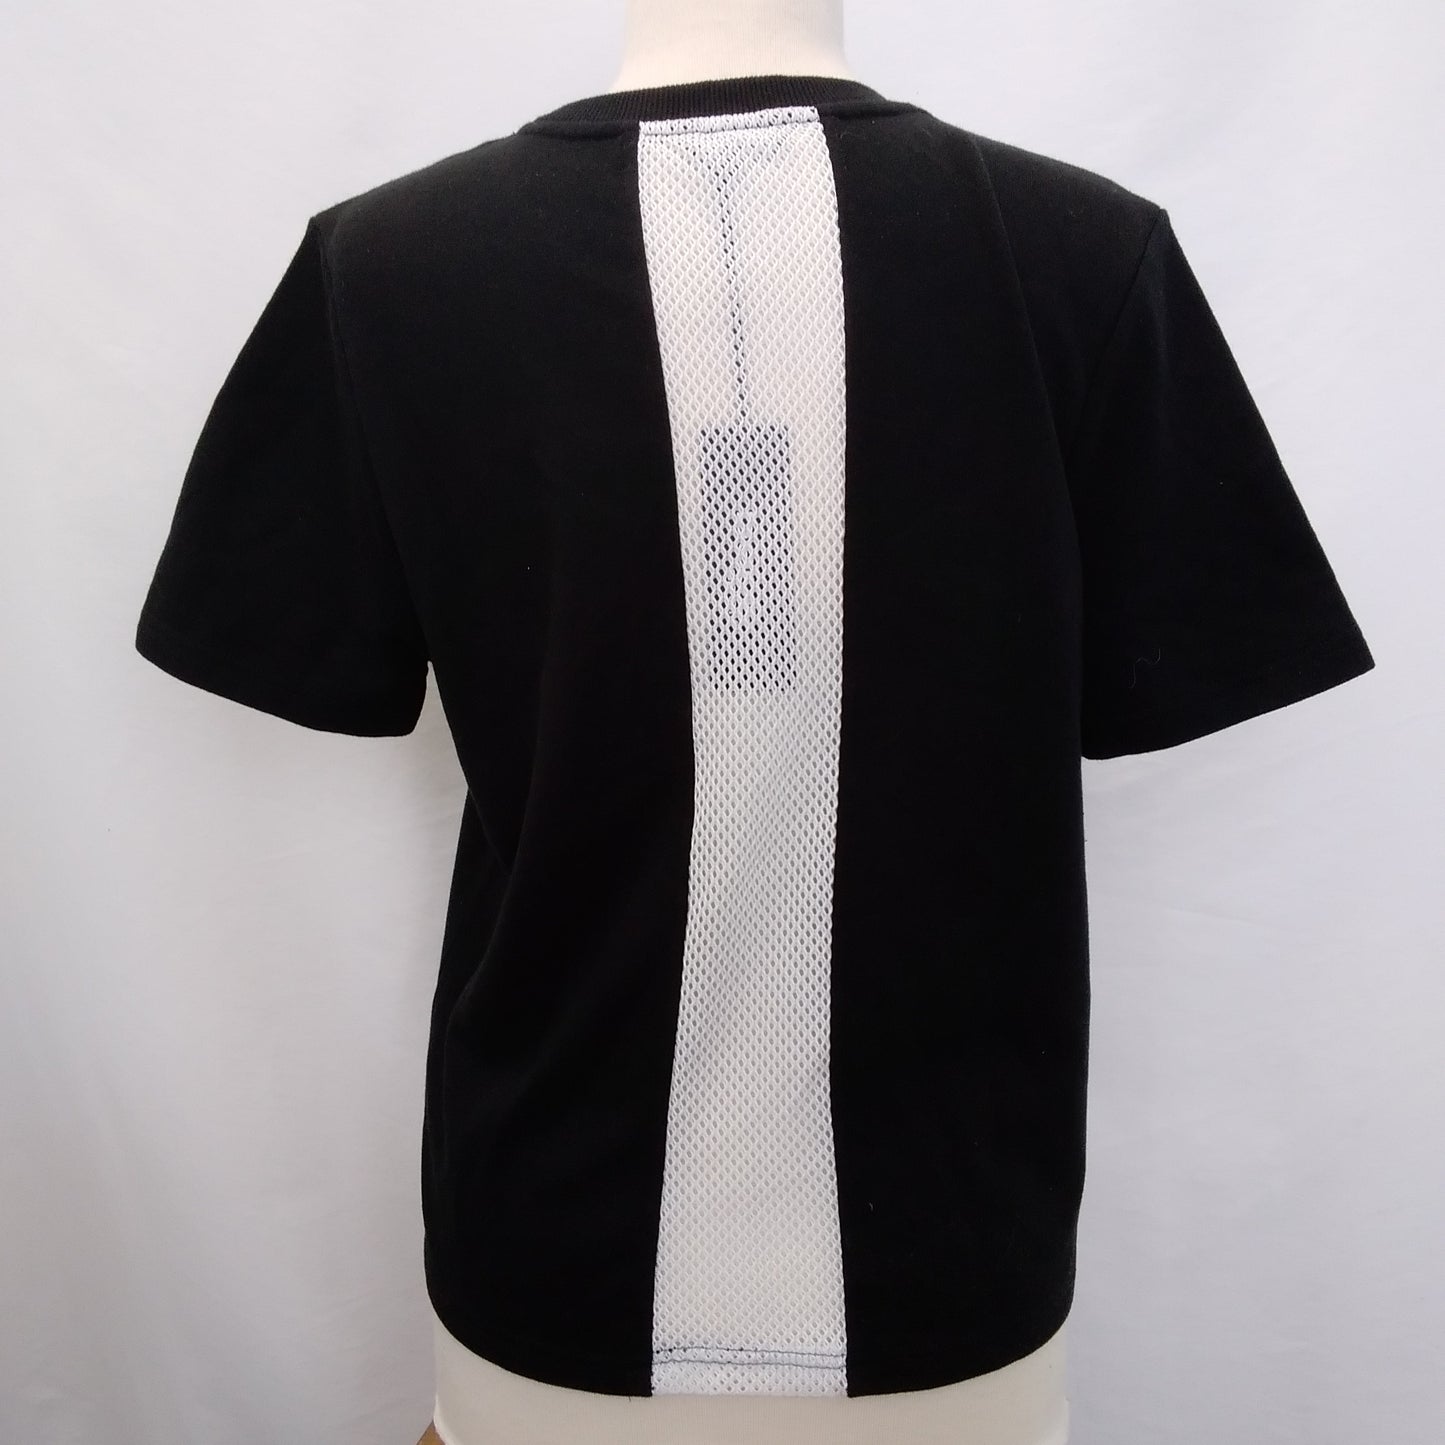 Bebe Sport Black Mesh Vented Back Short Sleeve Tee Shirt - L